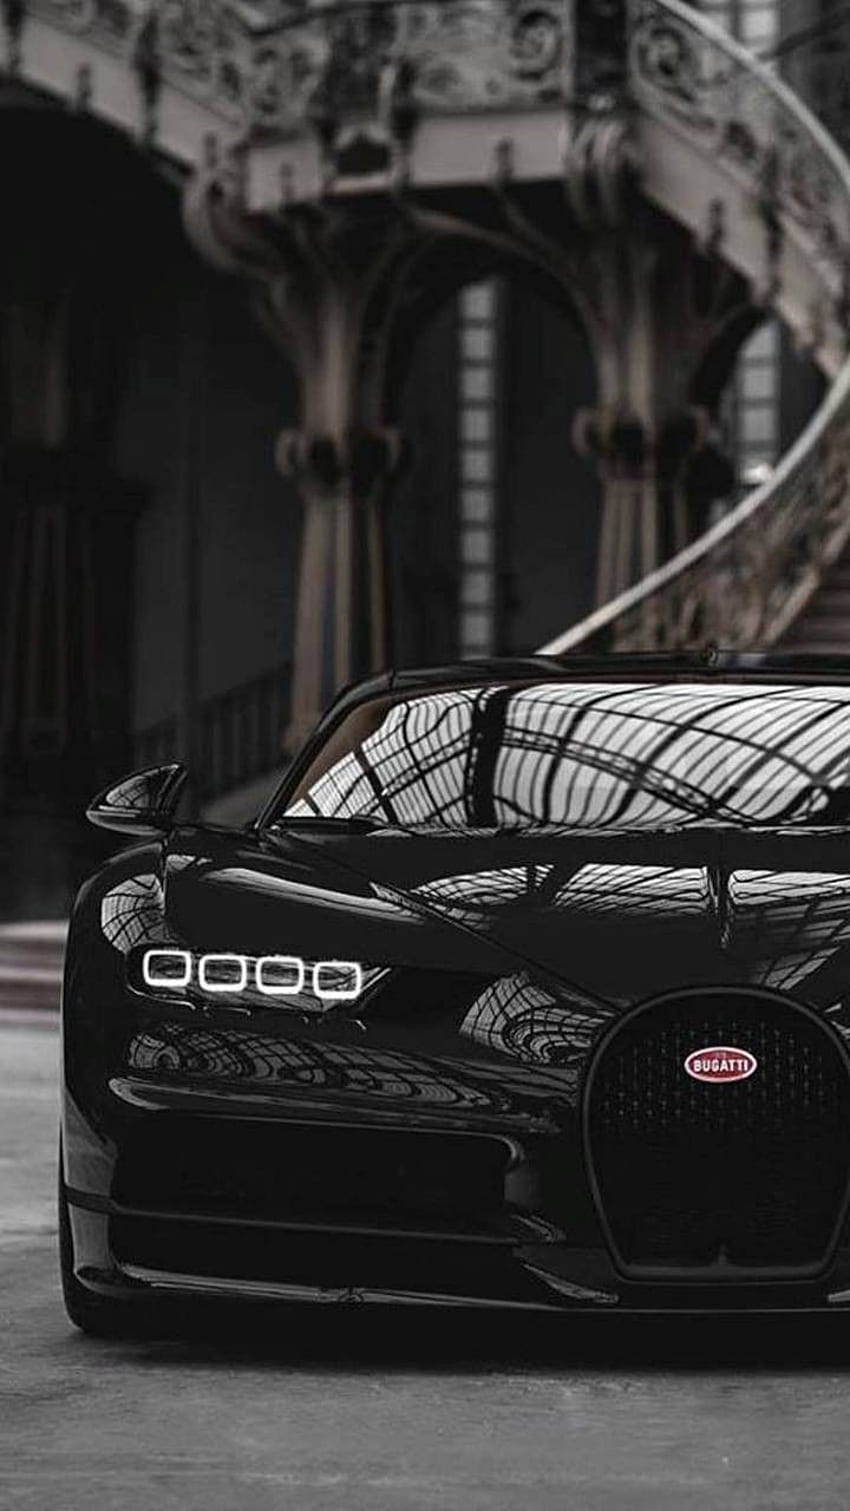 Bugatti Chiron - iPhone용 Bugatti Chiron, 블랙 부가티 HD 전화 배경 화면